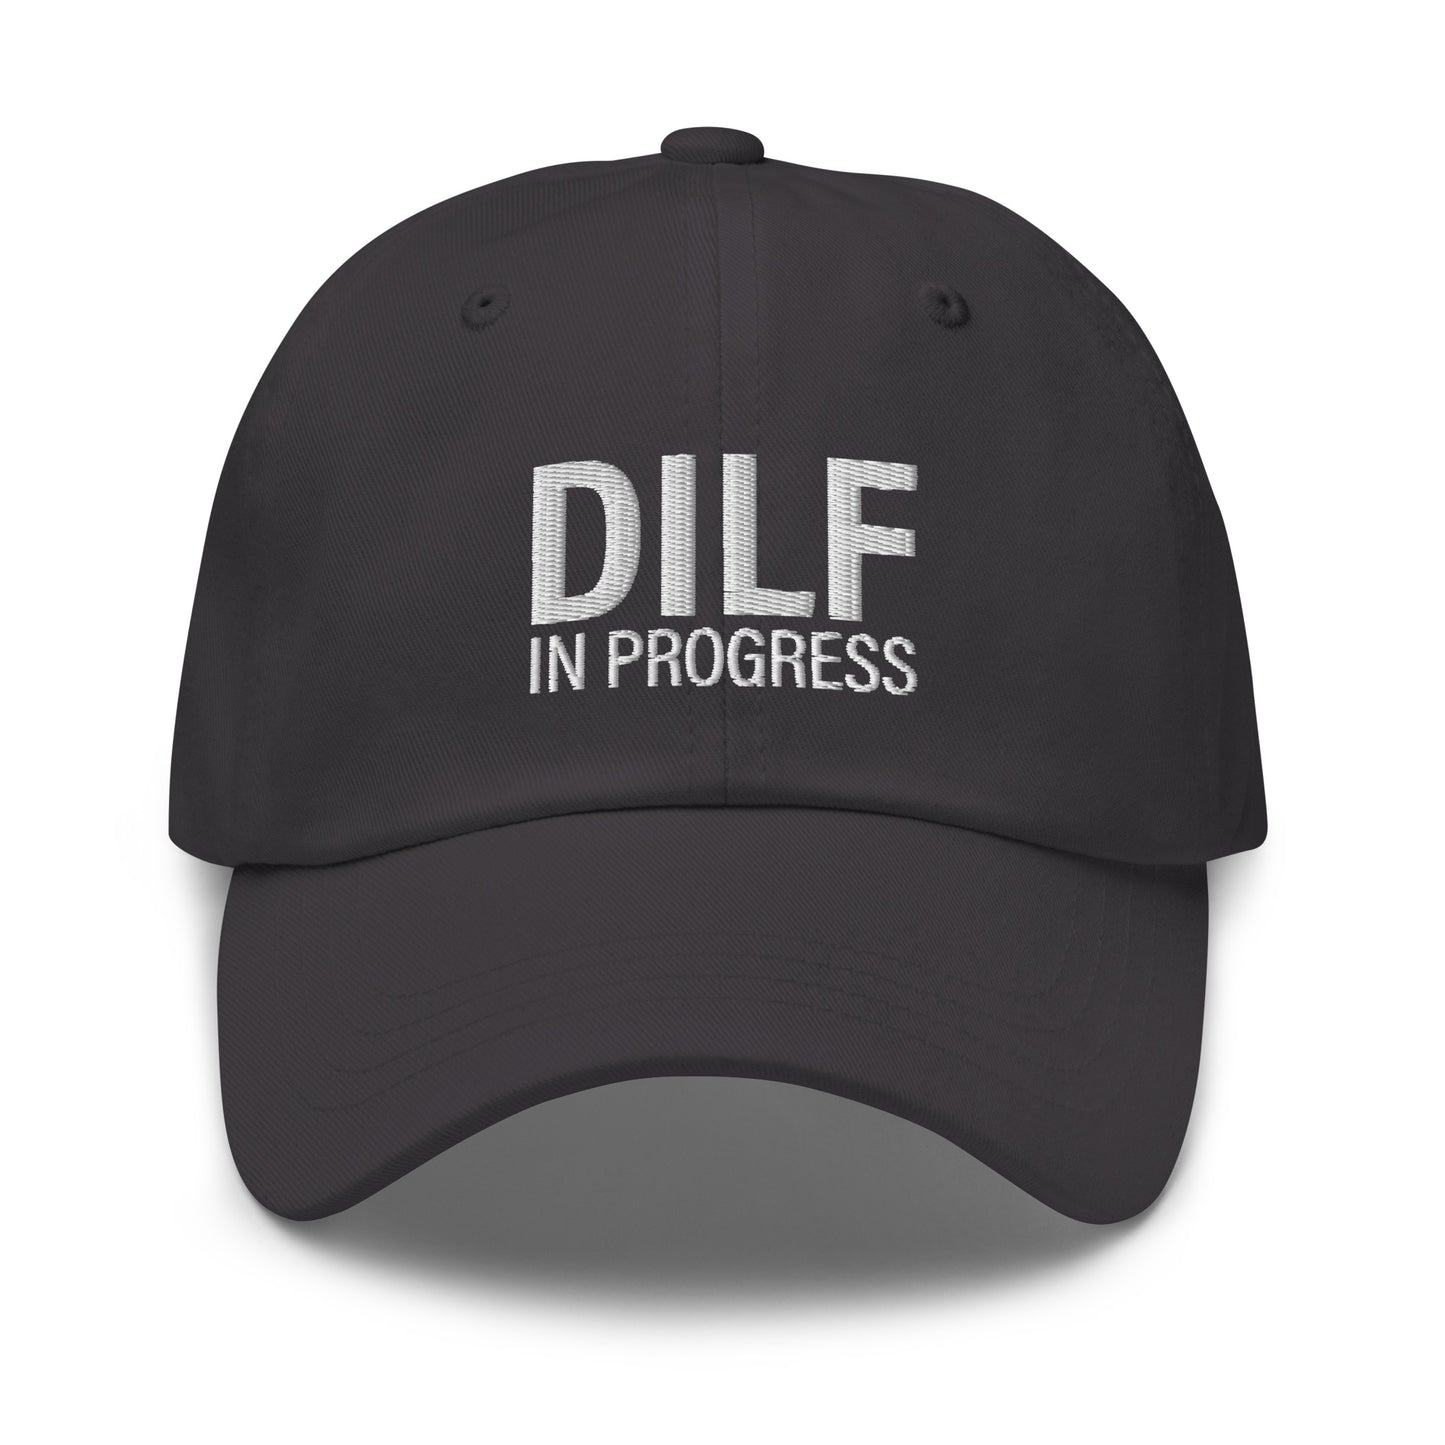 DILF in Progress hat